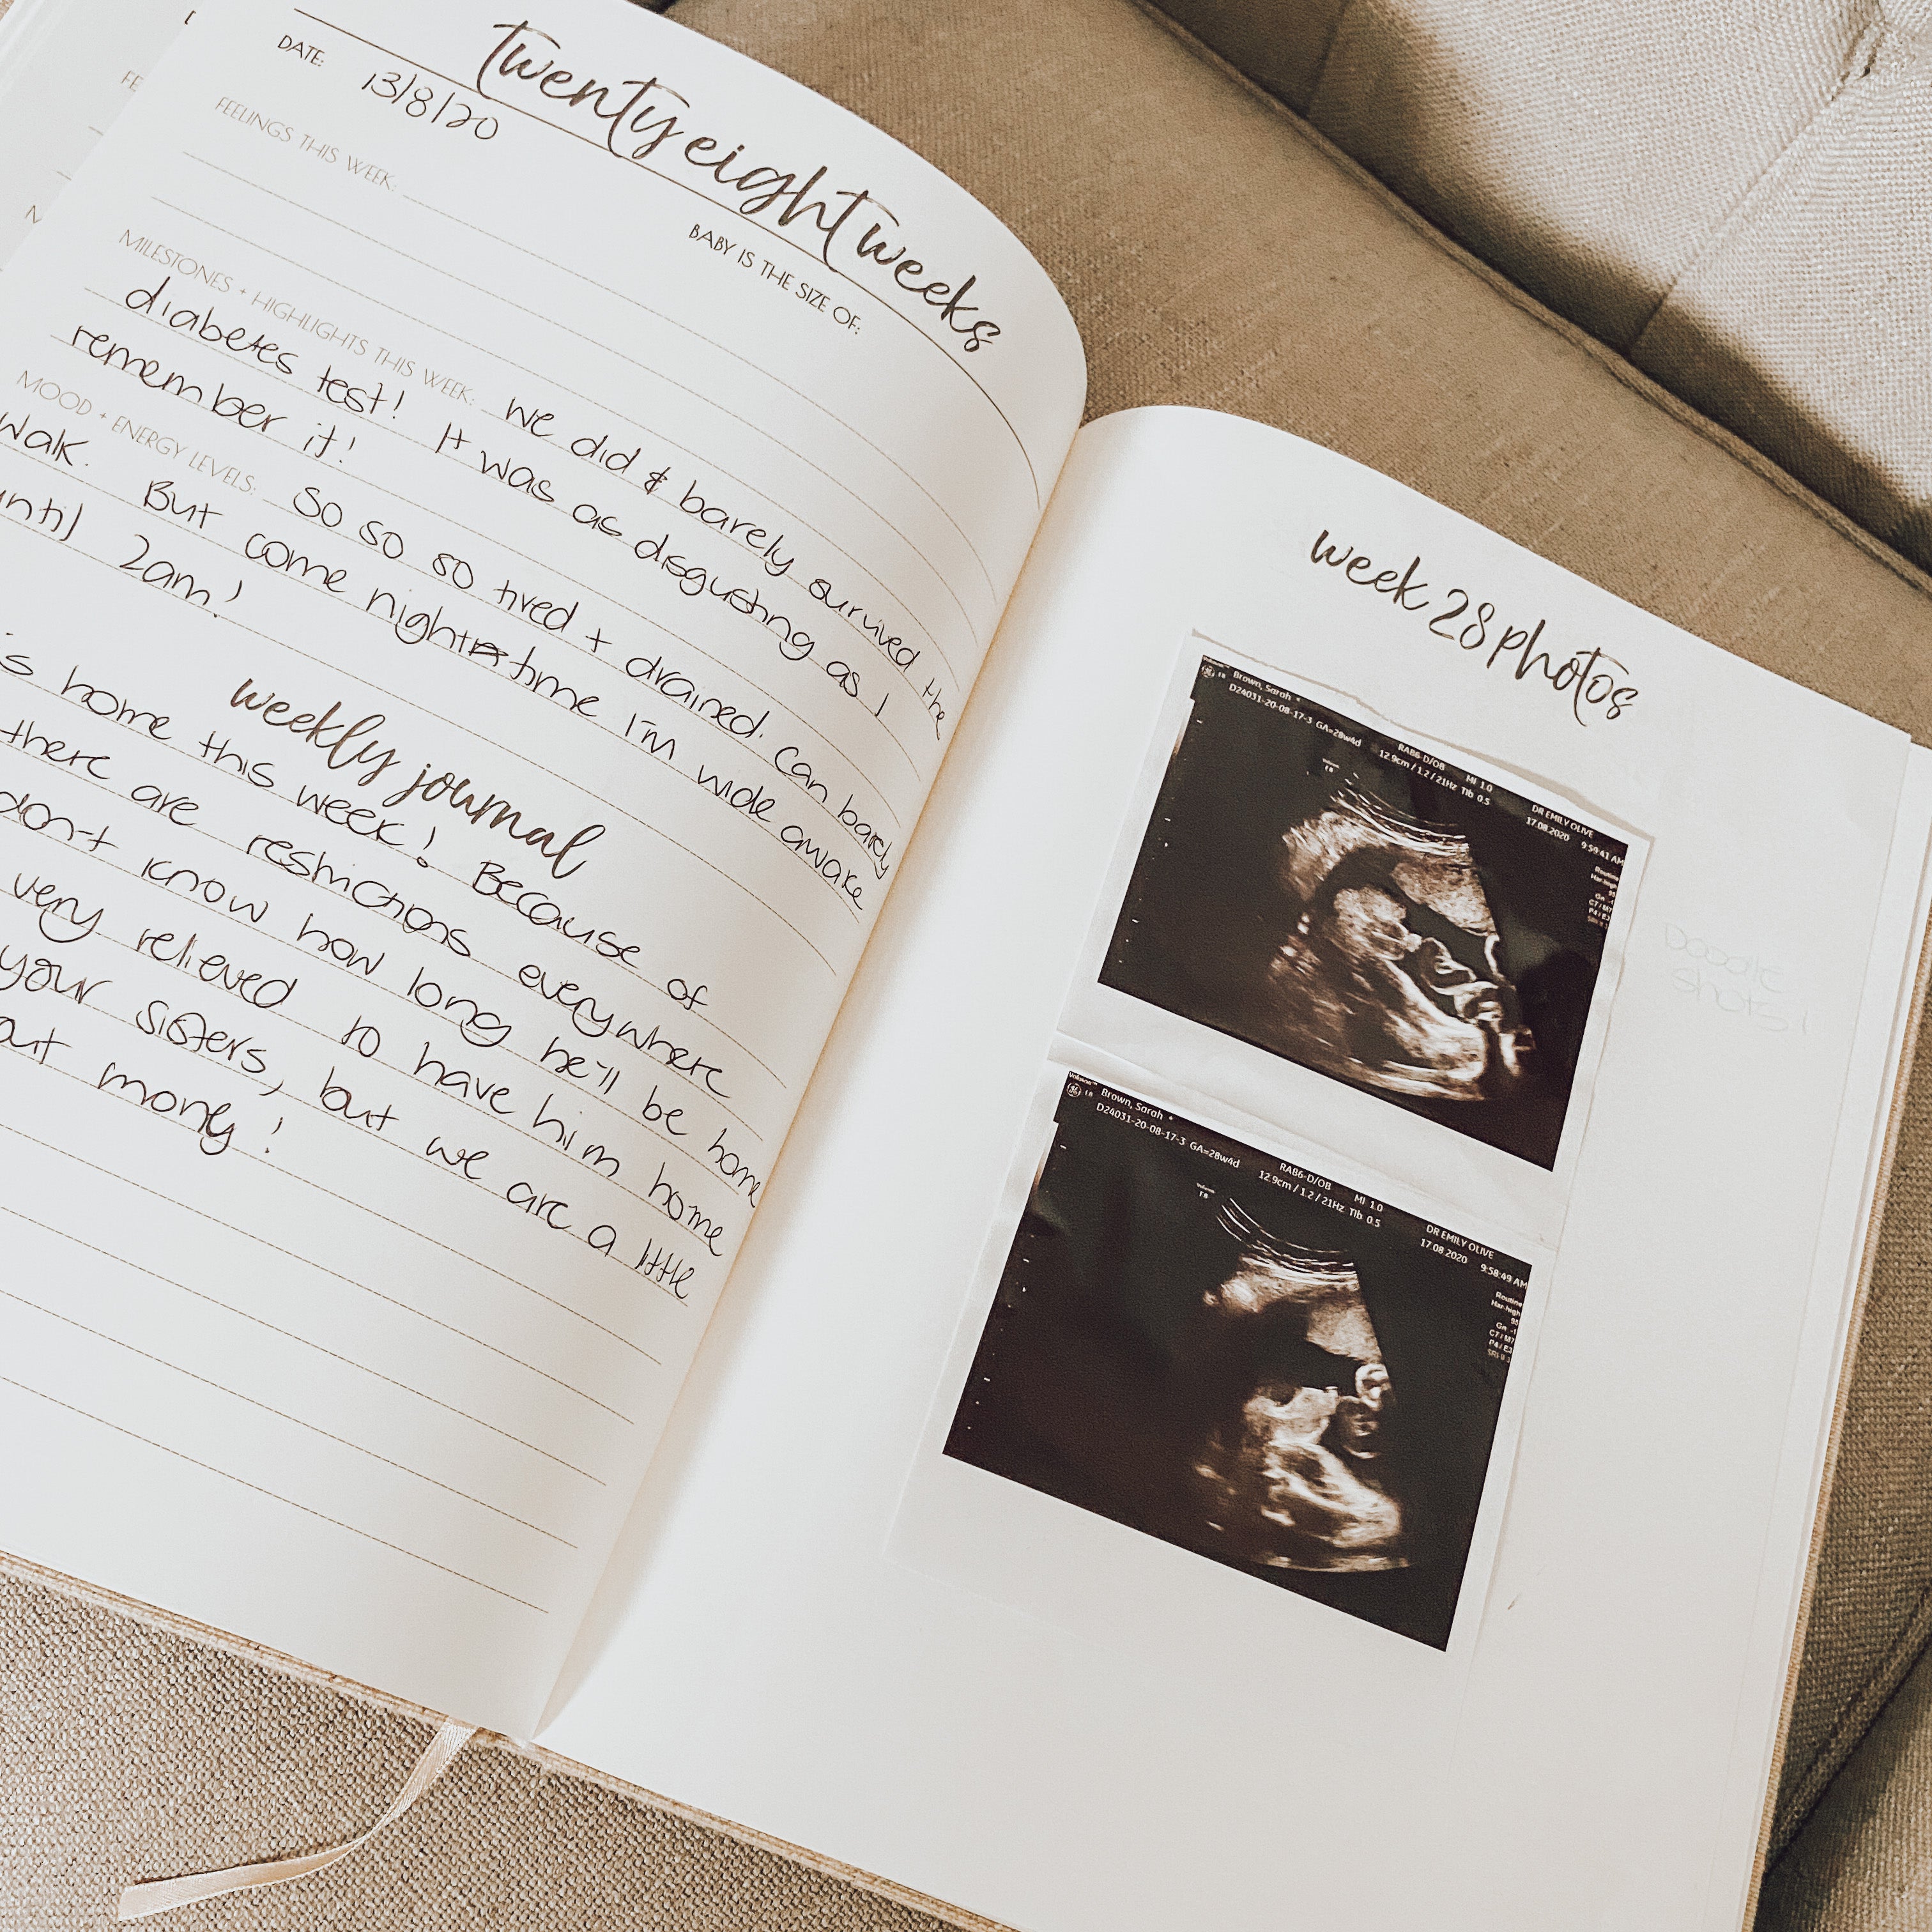 Pregnancy Journal Planner